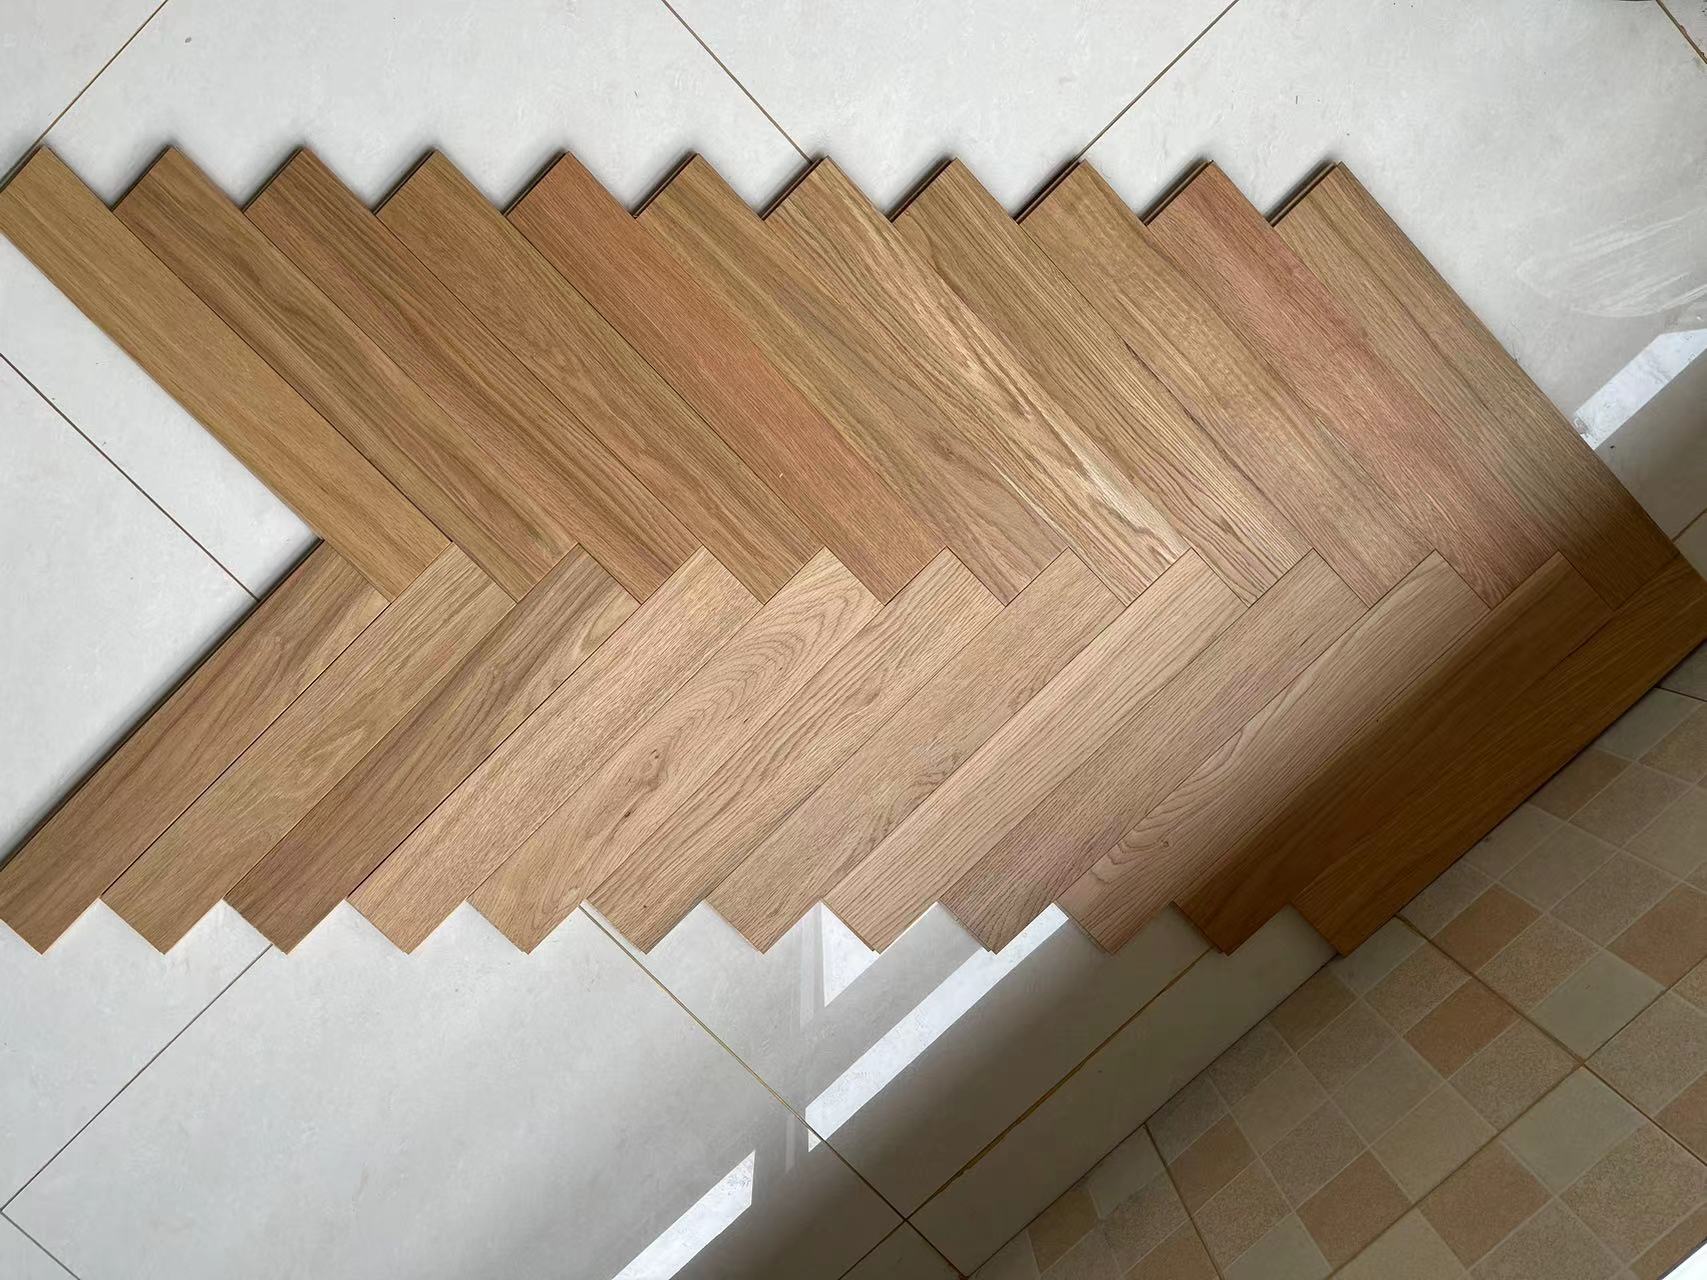 Oak Herringbone Flooring natural lacquered finished wood floors timber home decoration art tile wallpaper deco